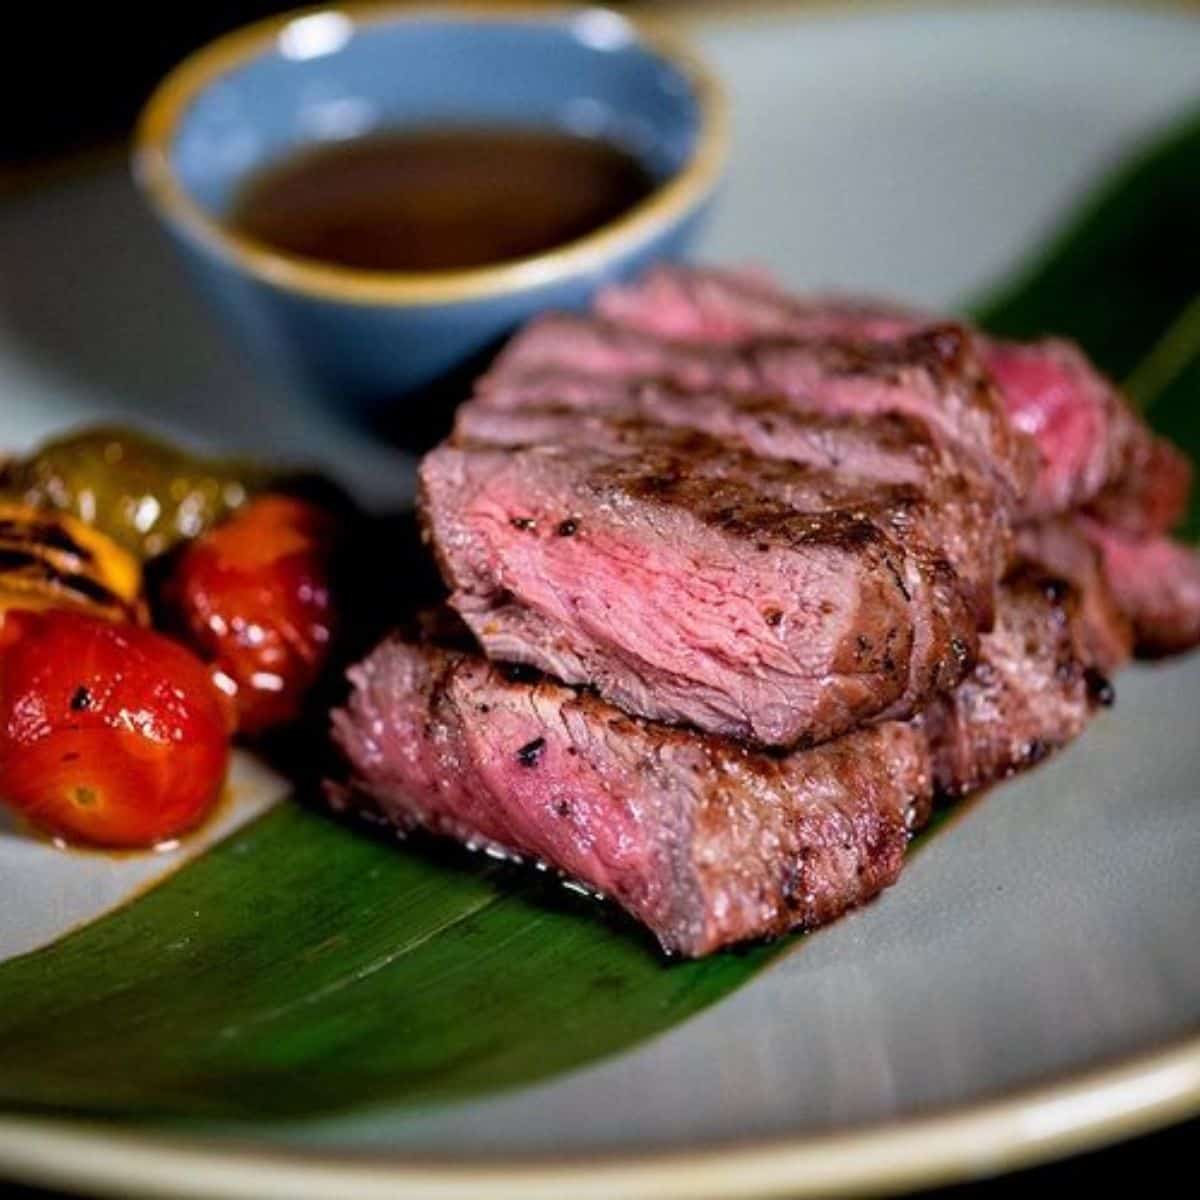 halal steak in london wagyu kagoshima beef with veggies on the side